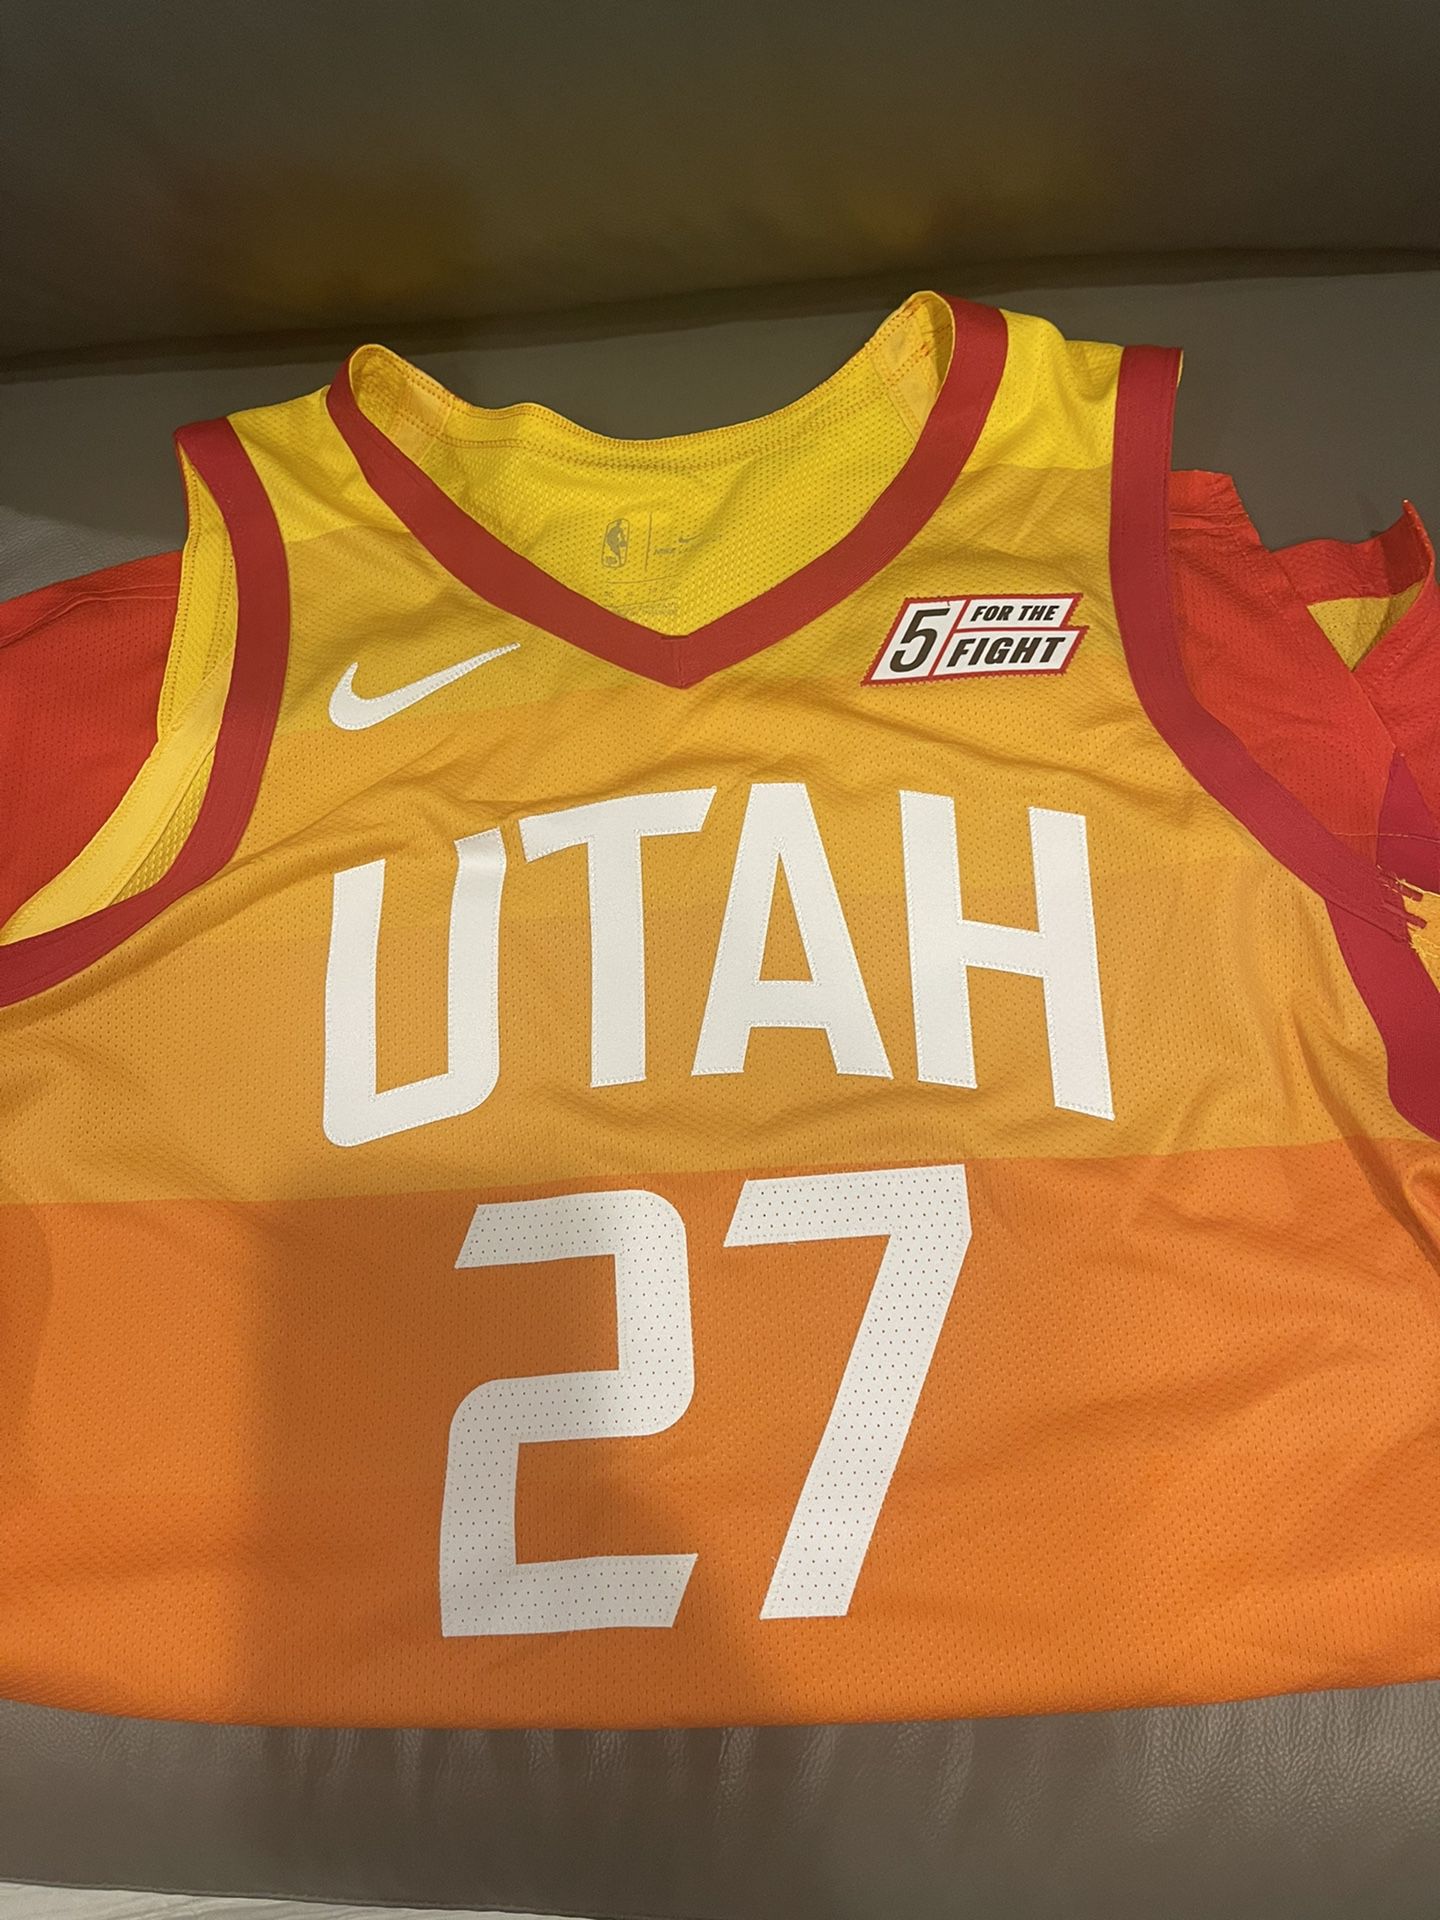 Brand New Utah Jazz Jersey - XL - $200